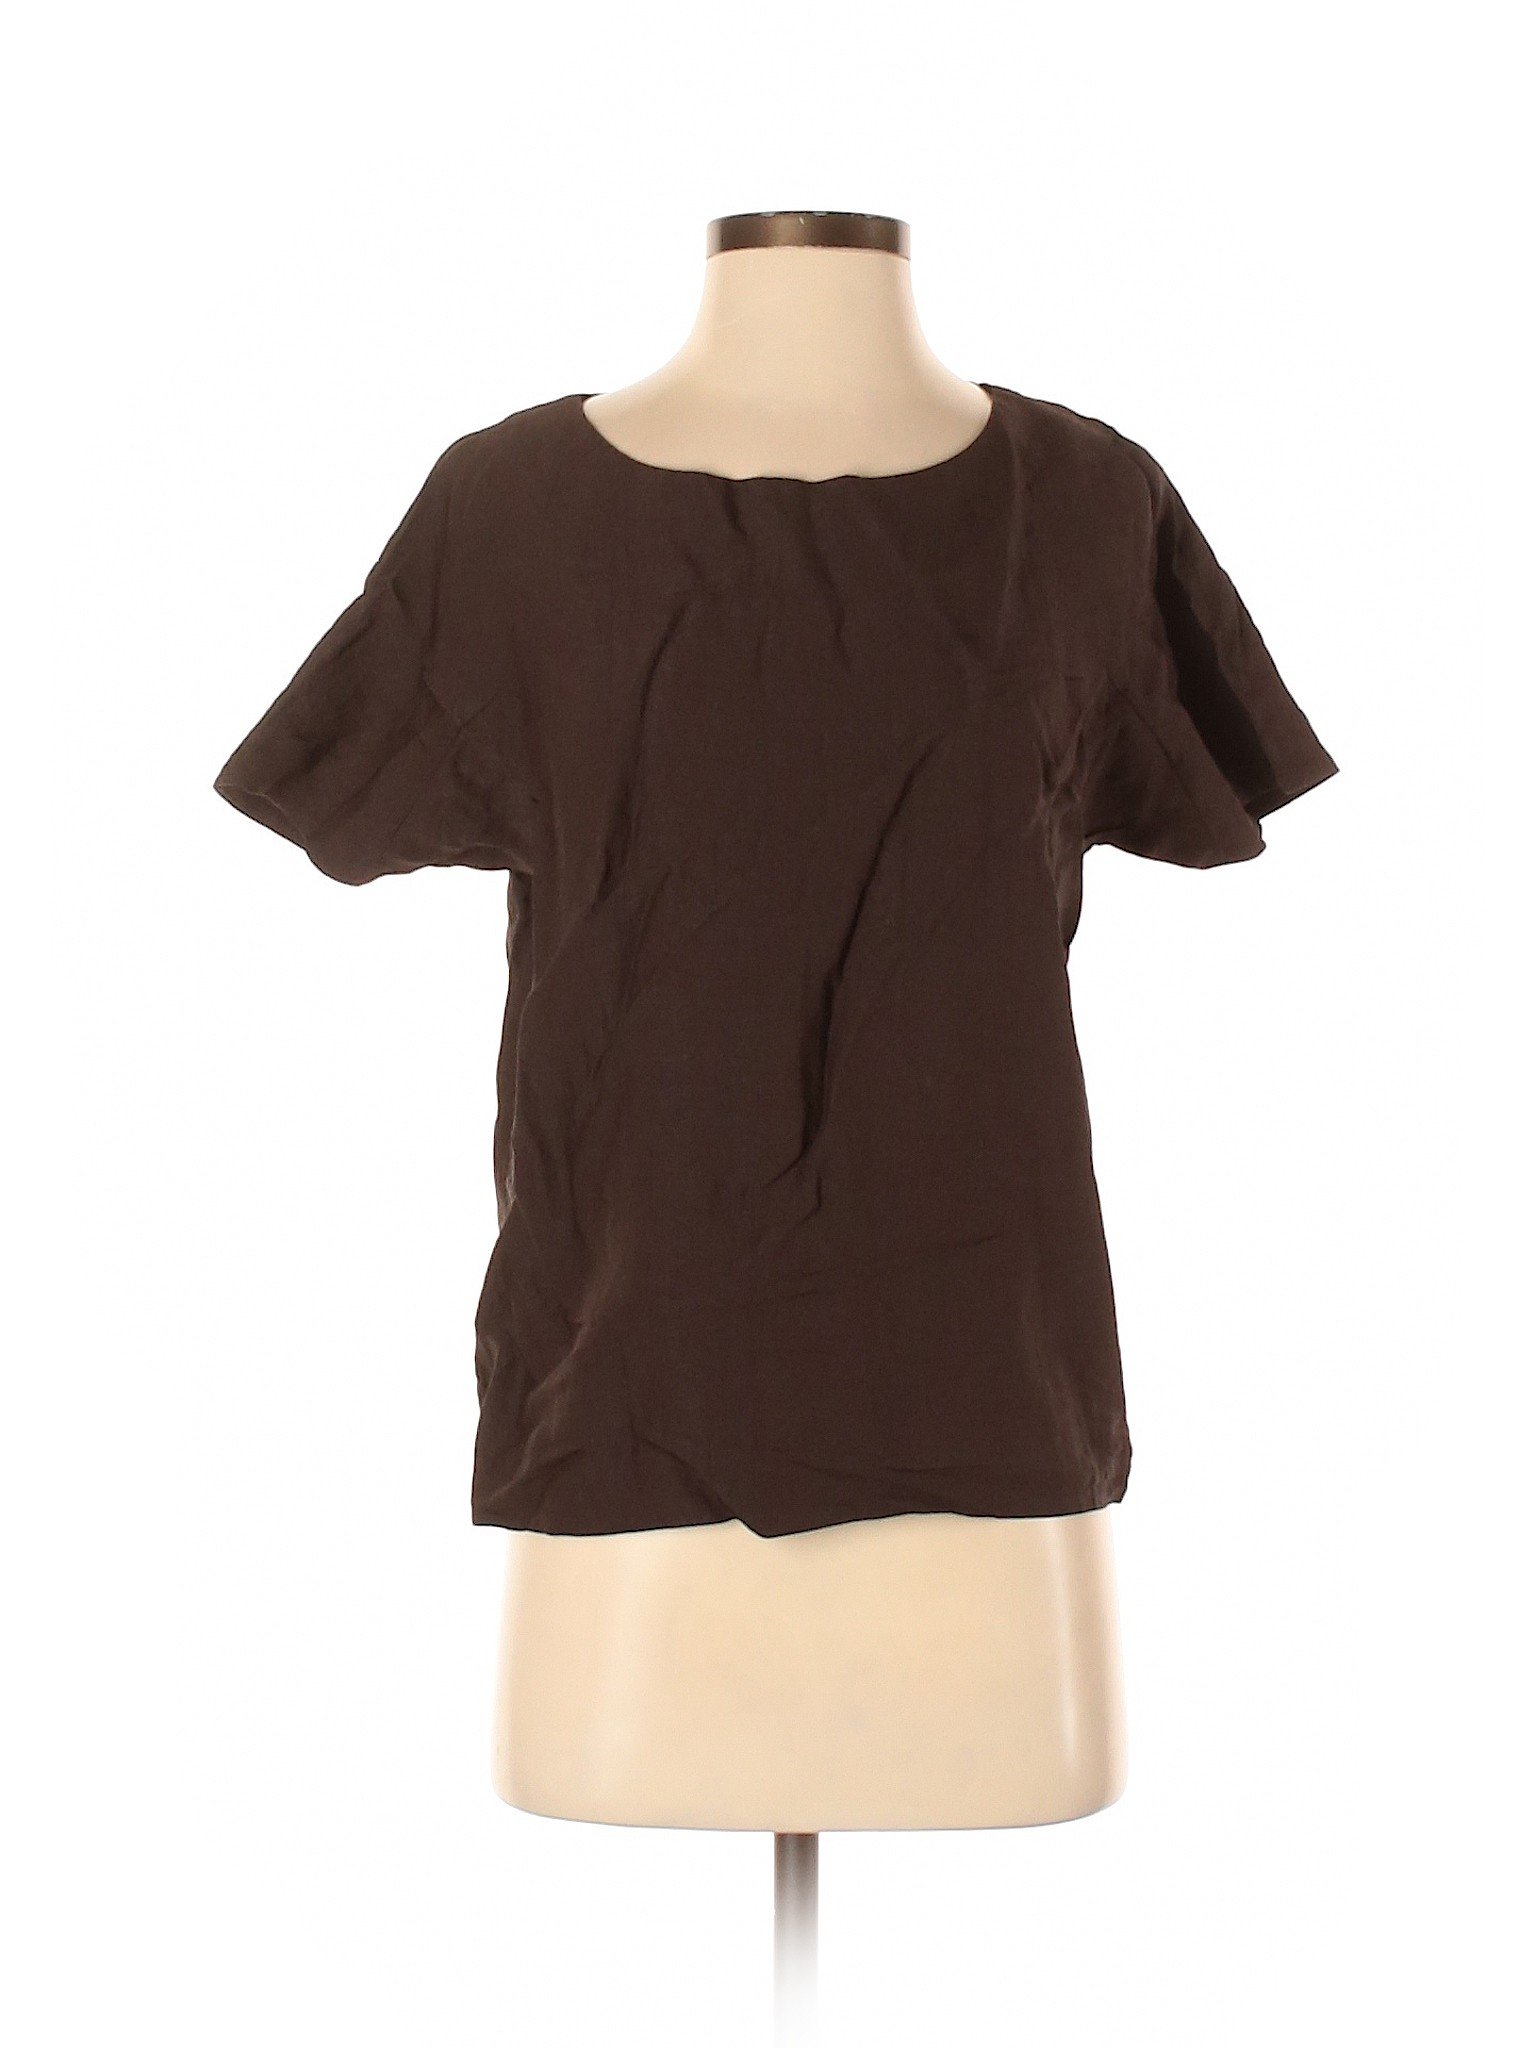 Lafayette 148 New York Women Brown Short Sleeve Blouse S | eBay